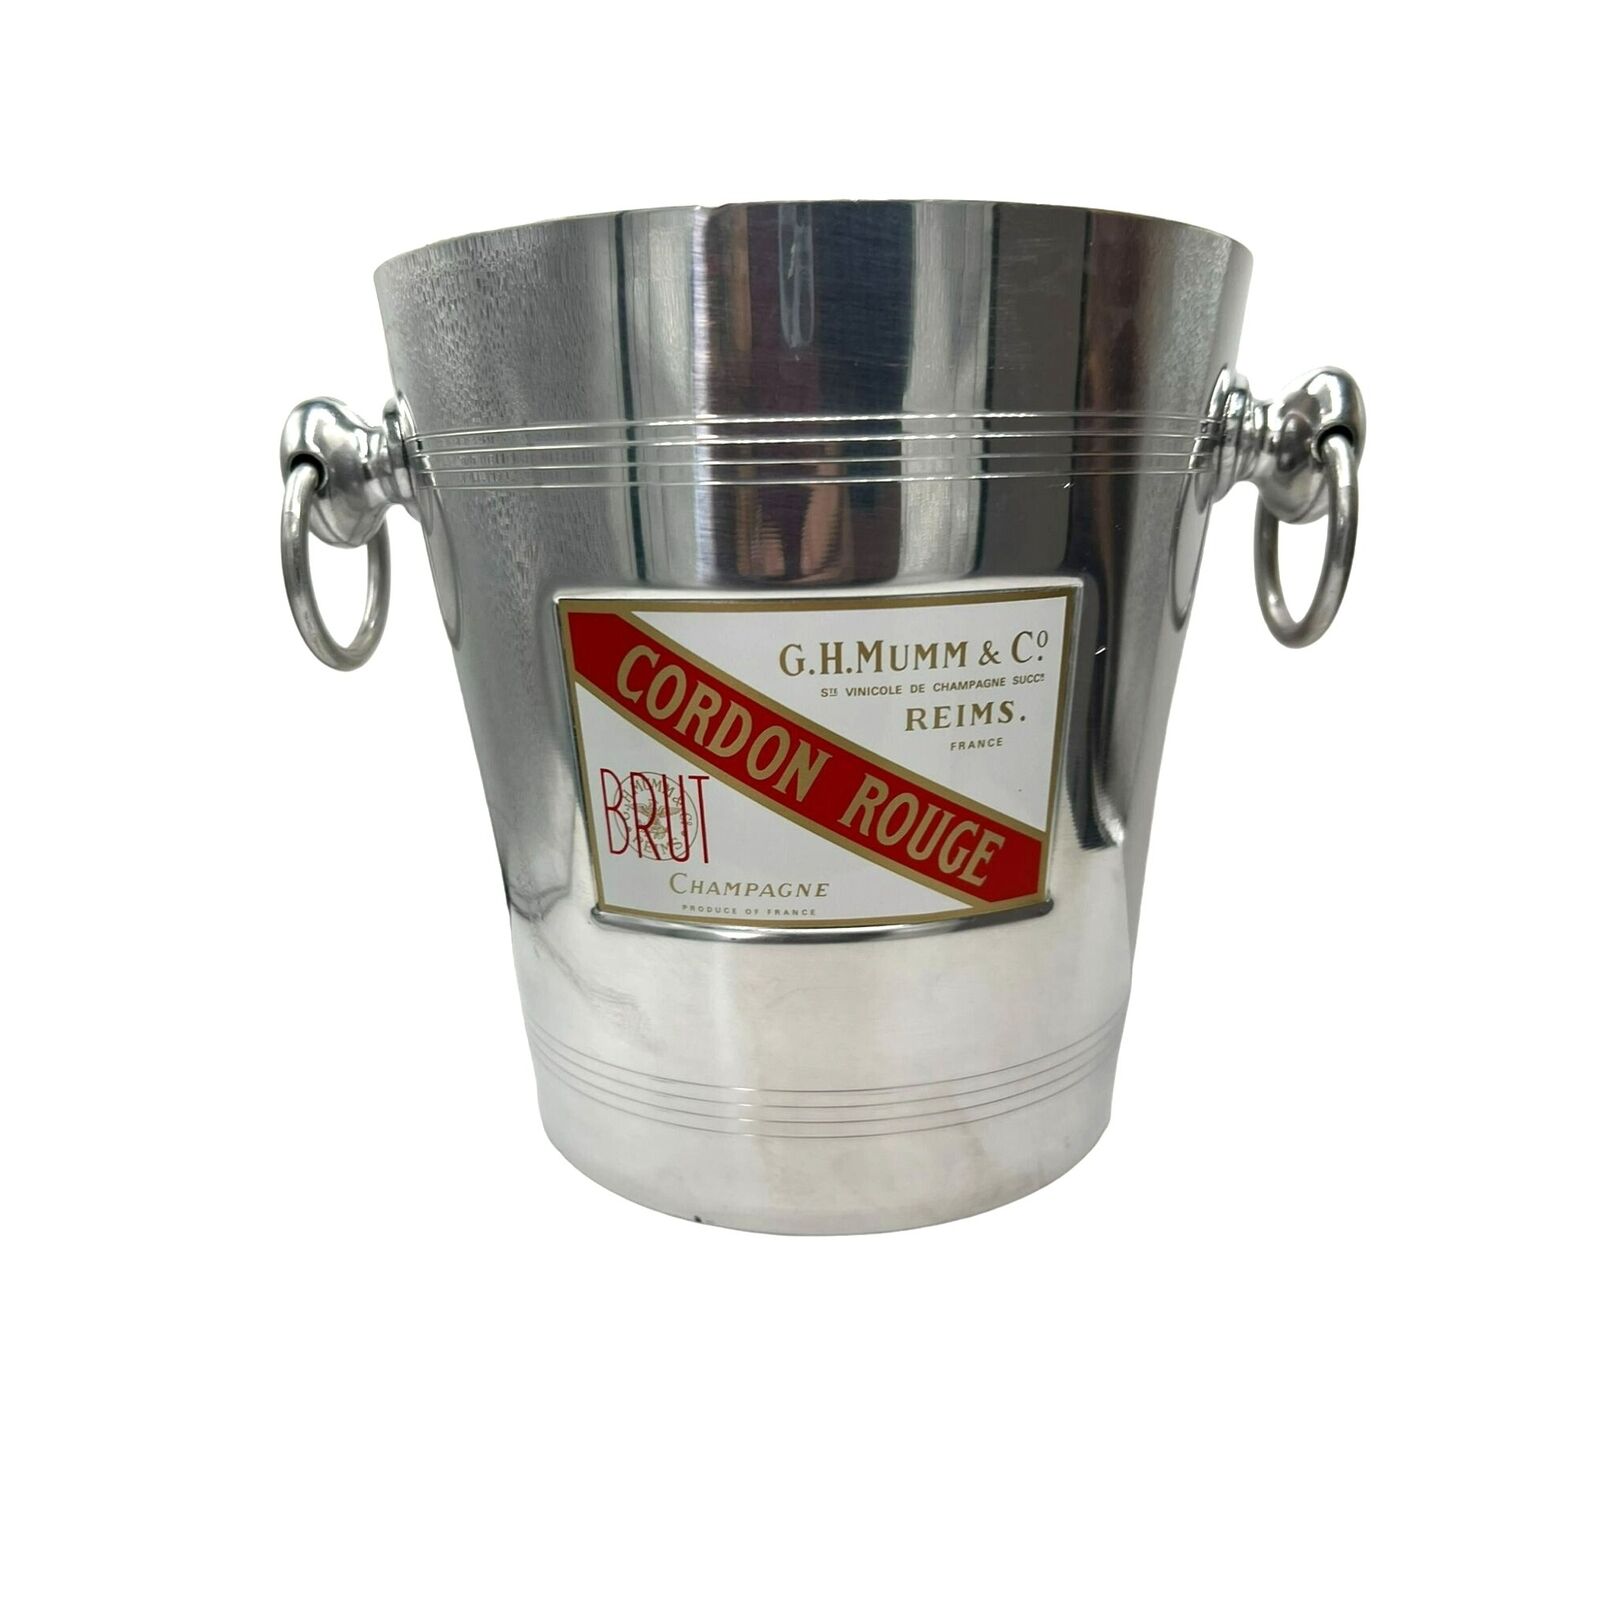 VTG Champagne Ice Bucket CORDON ROUGE G H MUMM & Co. Metal France Wine Cooler